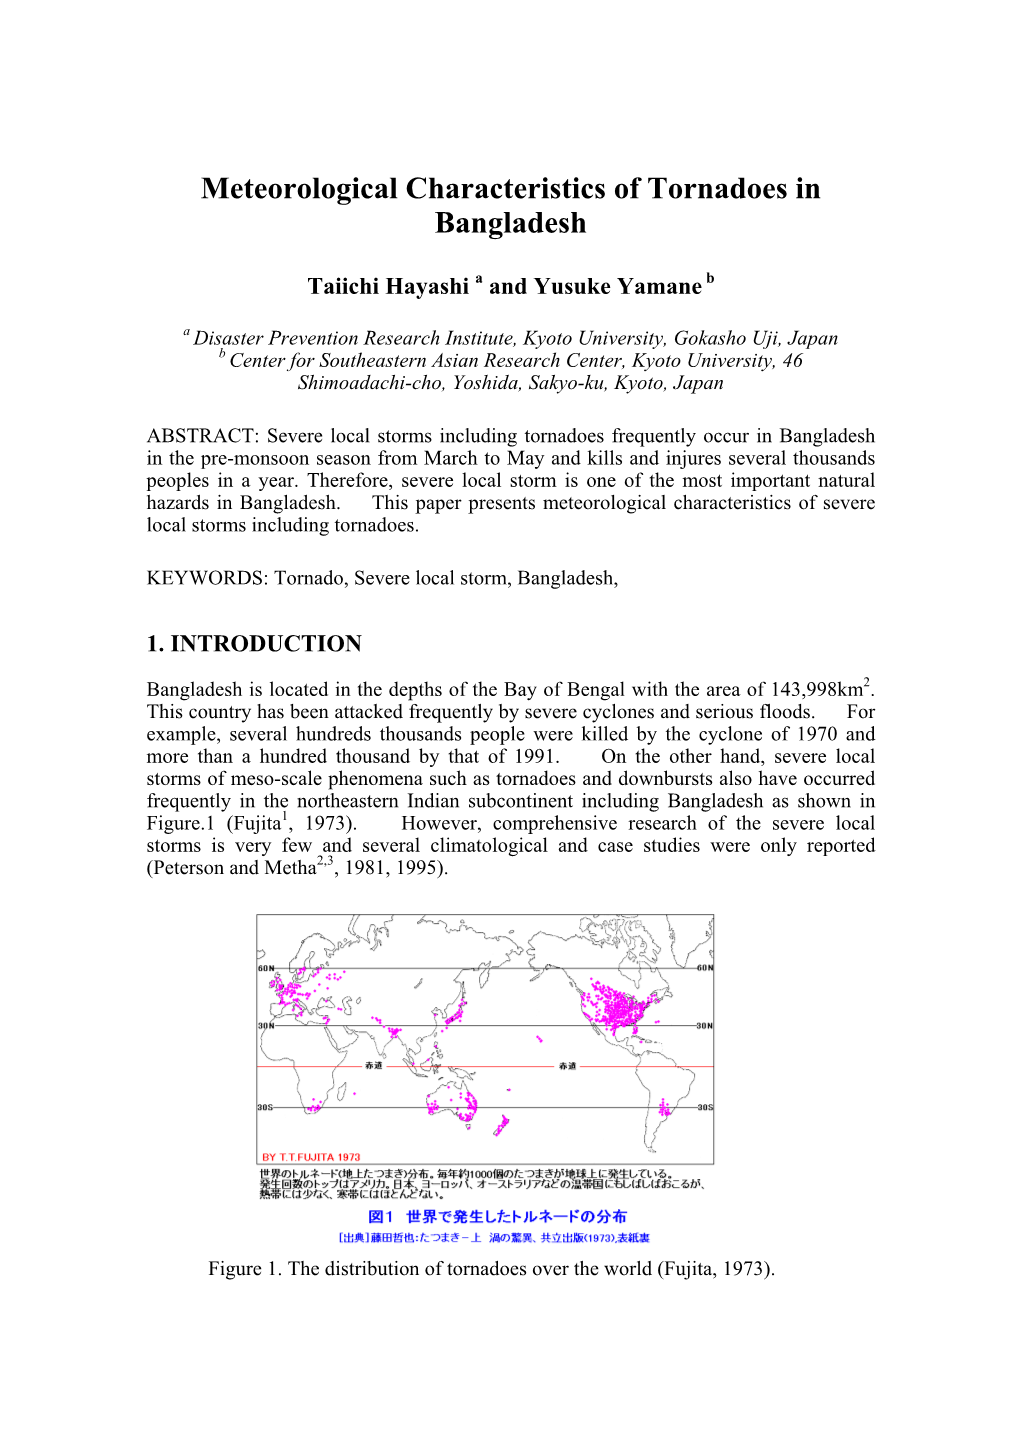 Meteorological Characteristics of Tornadoes in Bangladesh